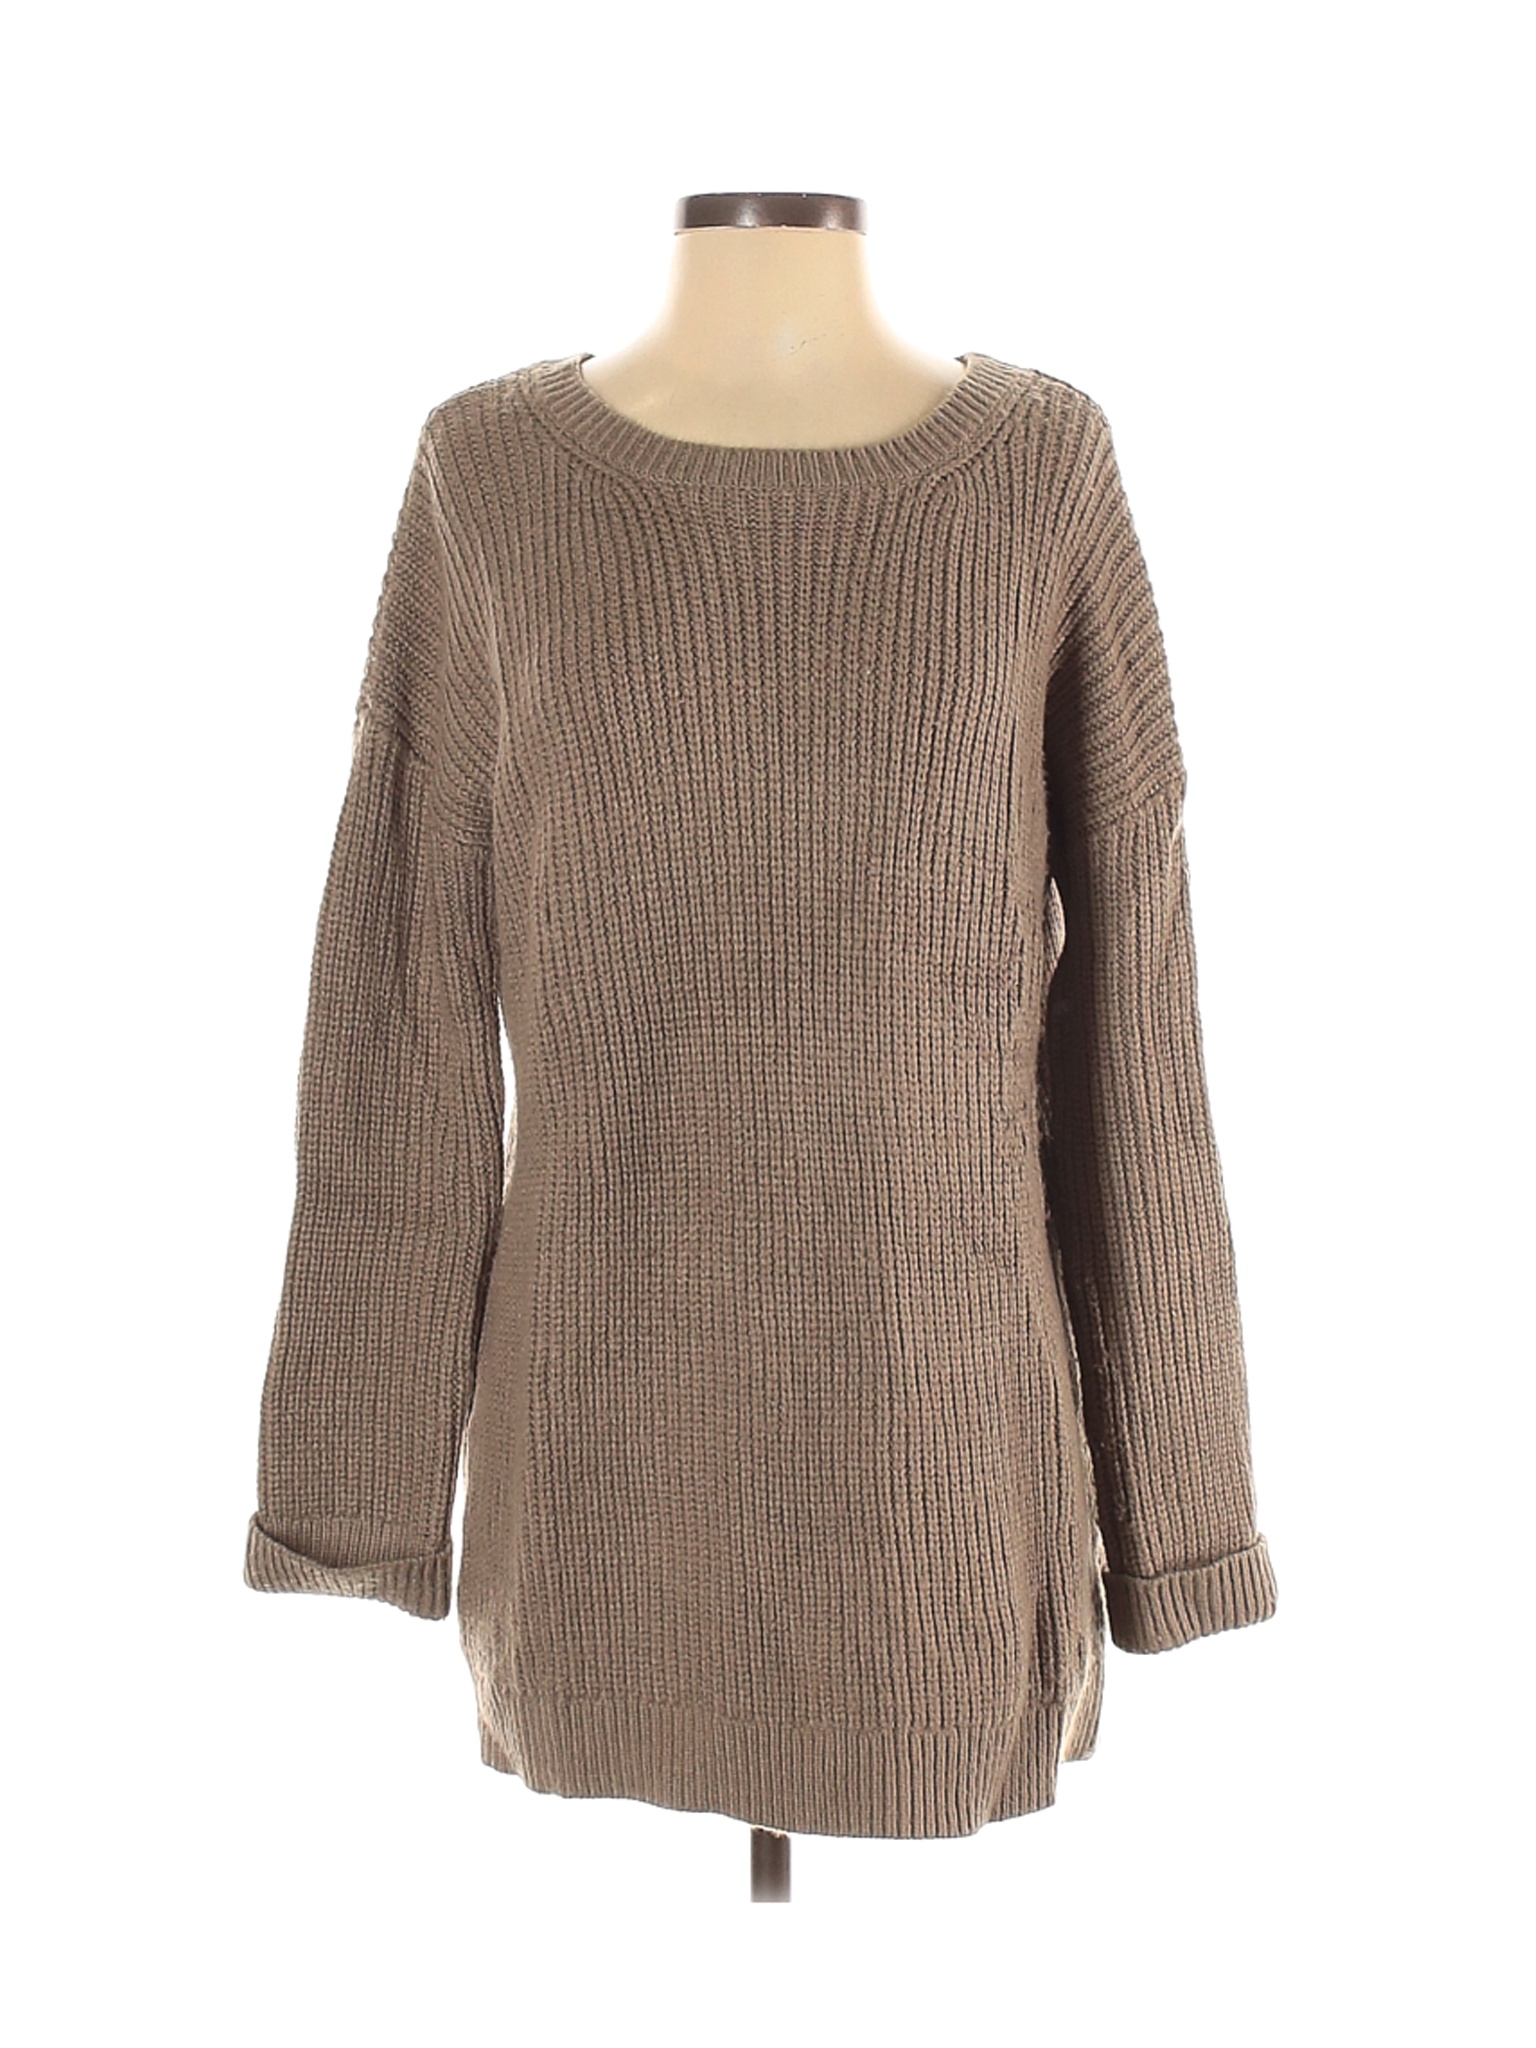 Forever 21 Women Brown Pullover Sweater S | eBay